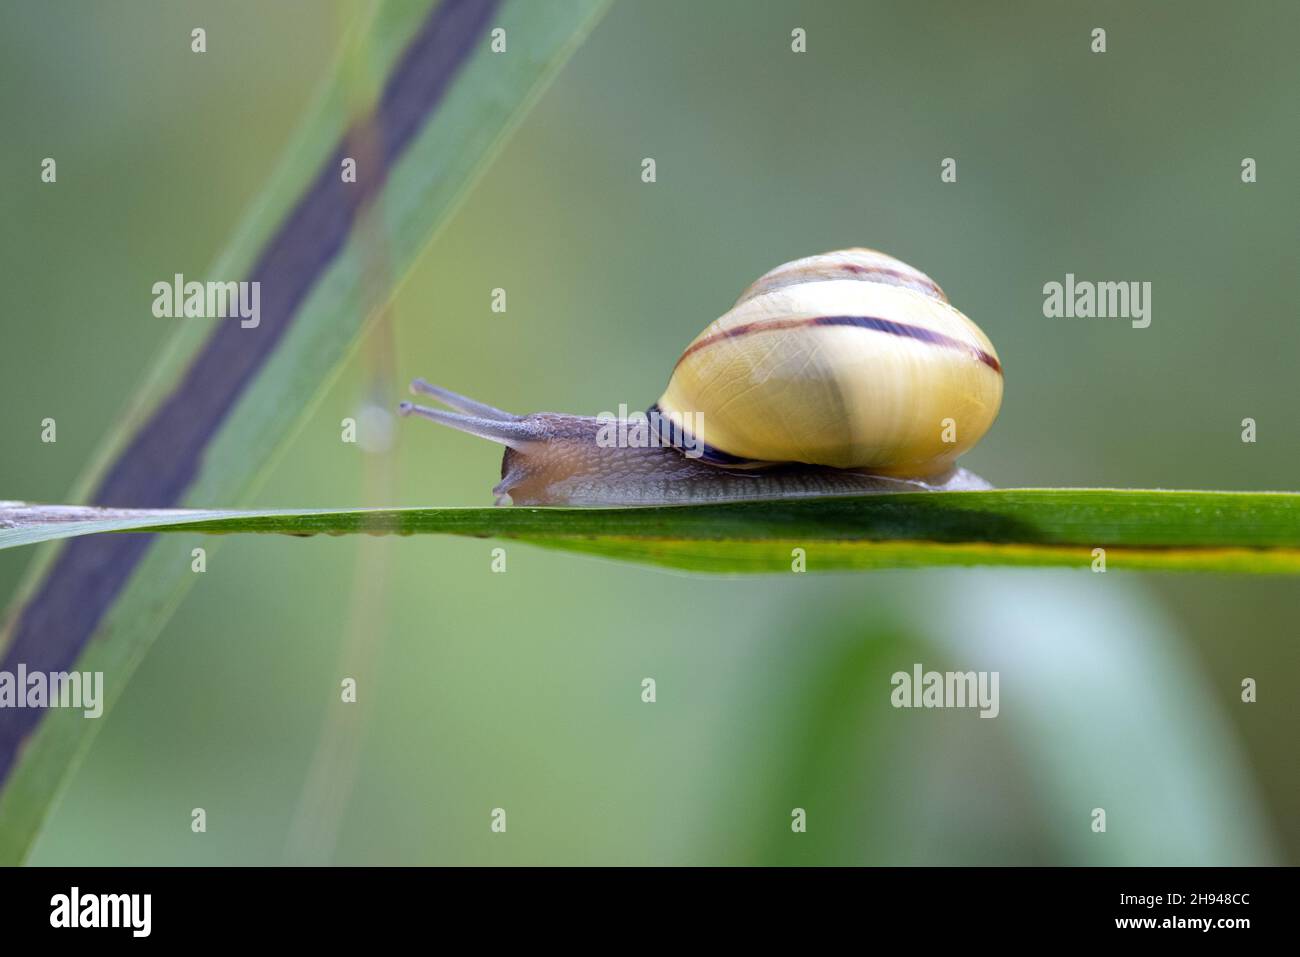 Braune-lipped Snail (Cepaea nemoralis) Strumpshaw Fen Norfolk GB Großbritannien September 2021 Stockfoto